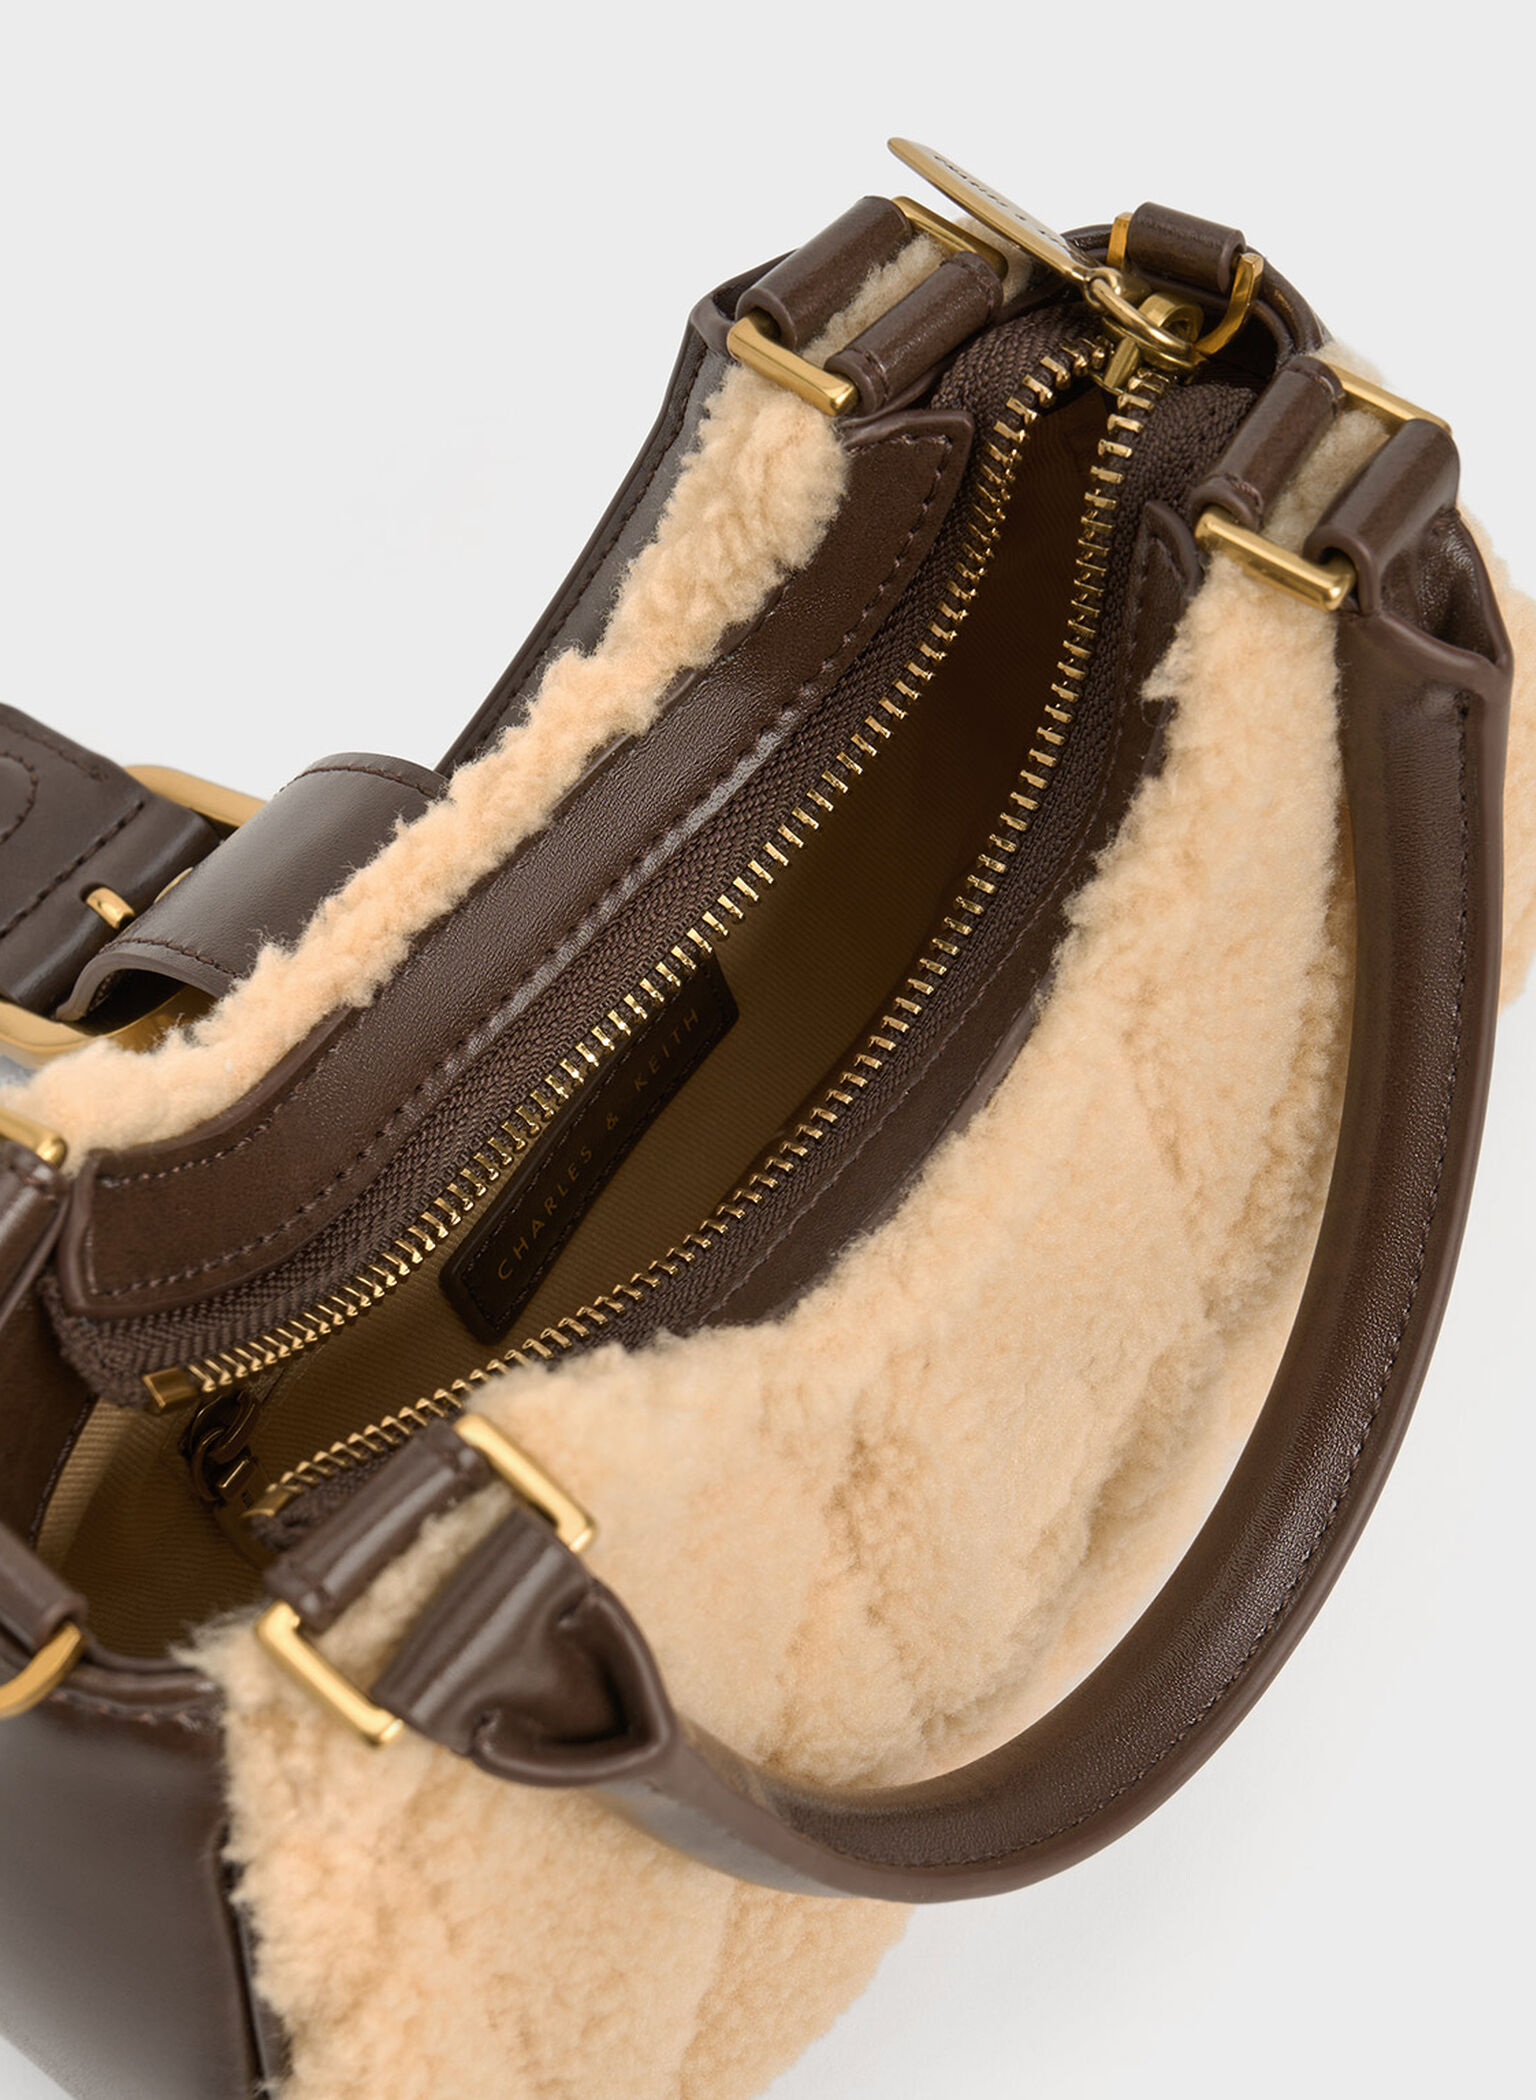 Avis Quilted-Fur Belted Top Handle Bag, Multi, hi-res